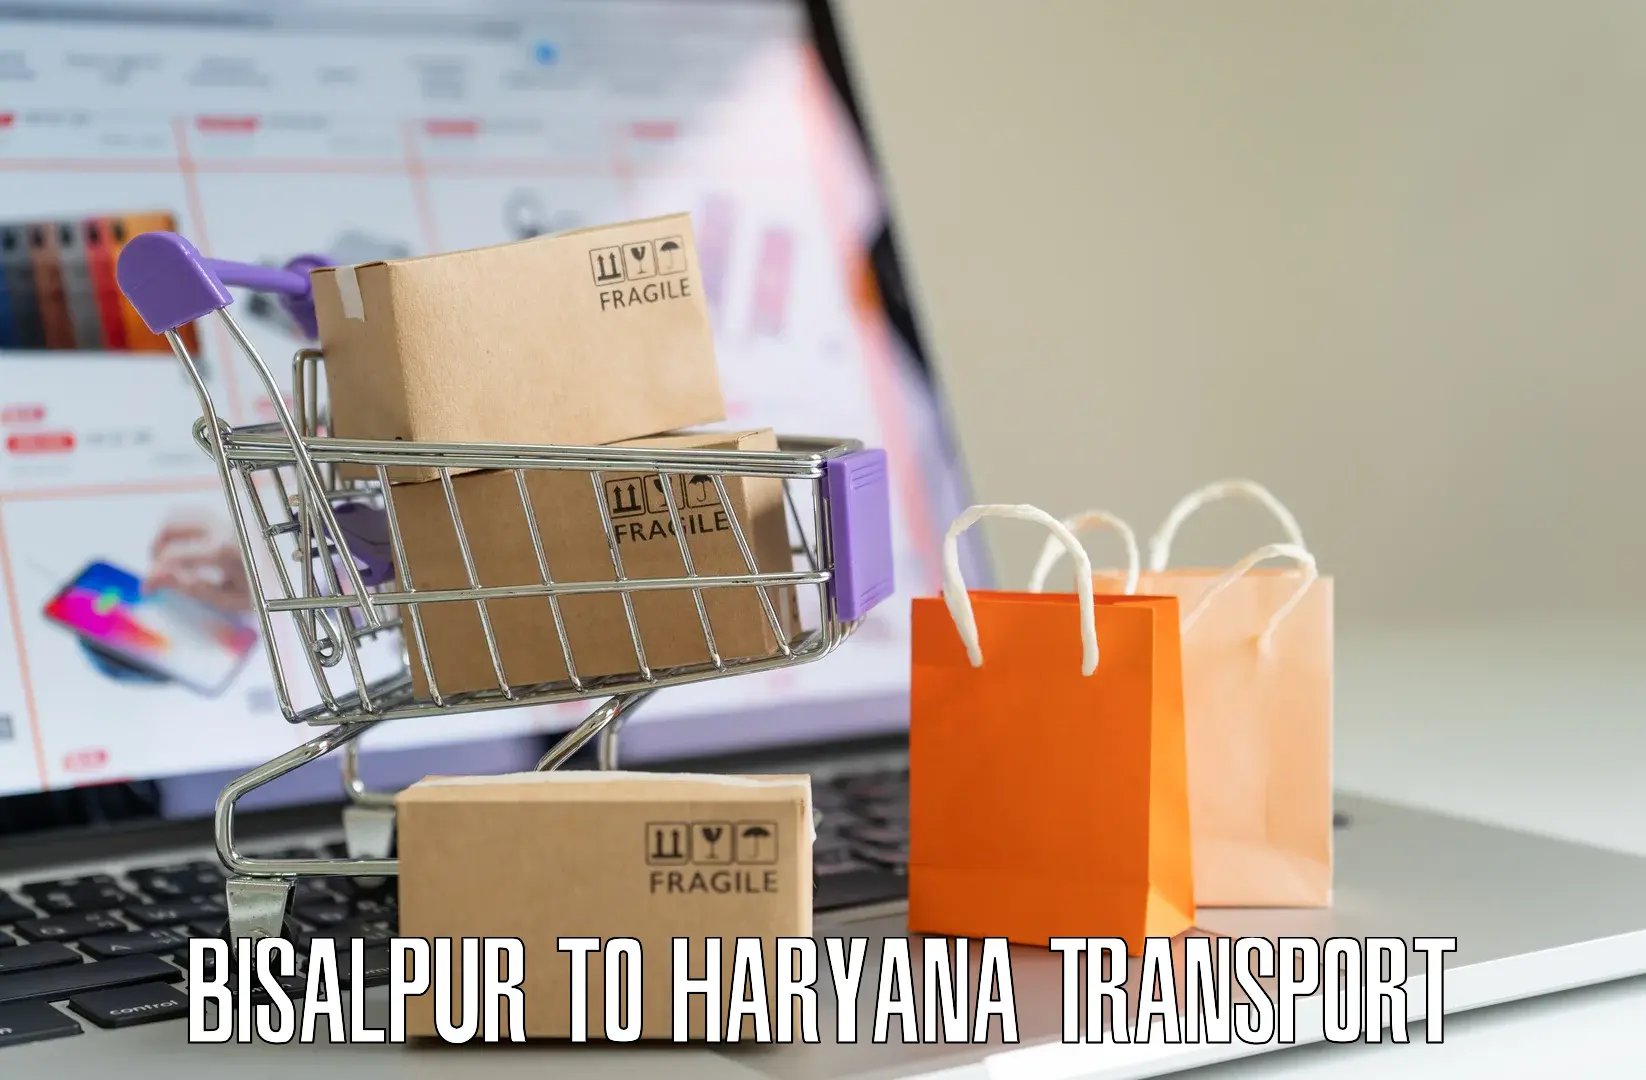 Two wheeler parcel service Bisalpur to Hansi